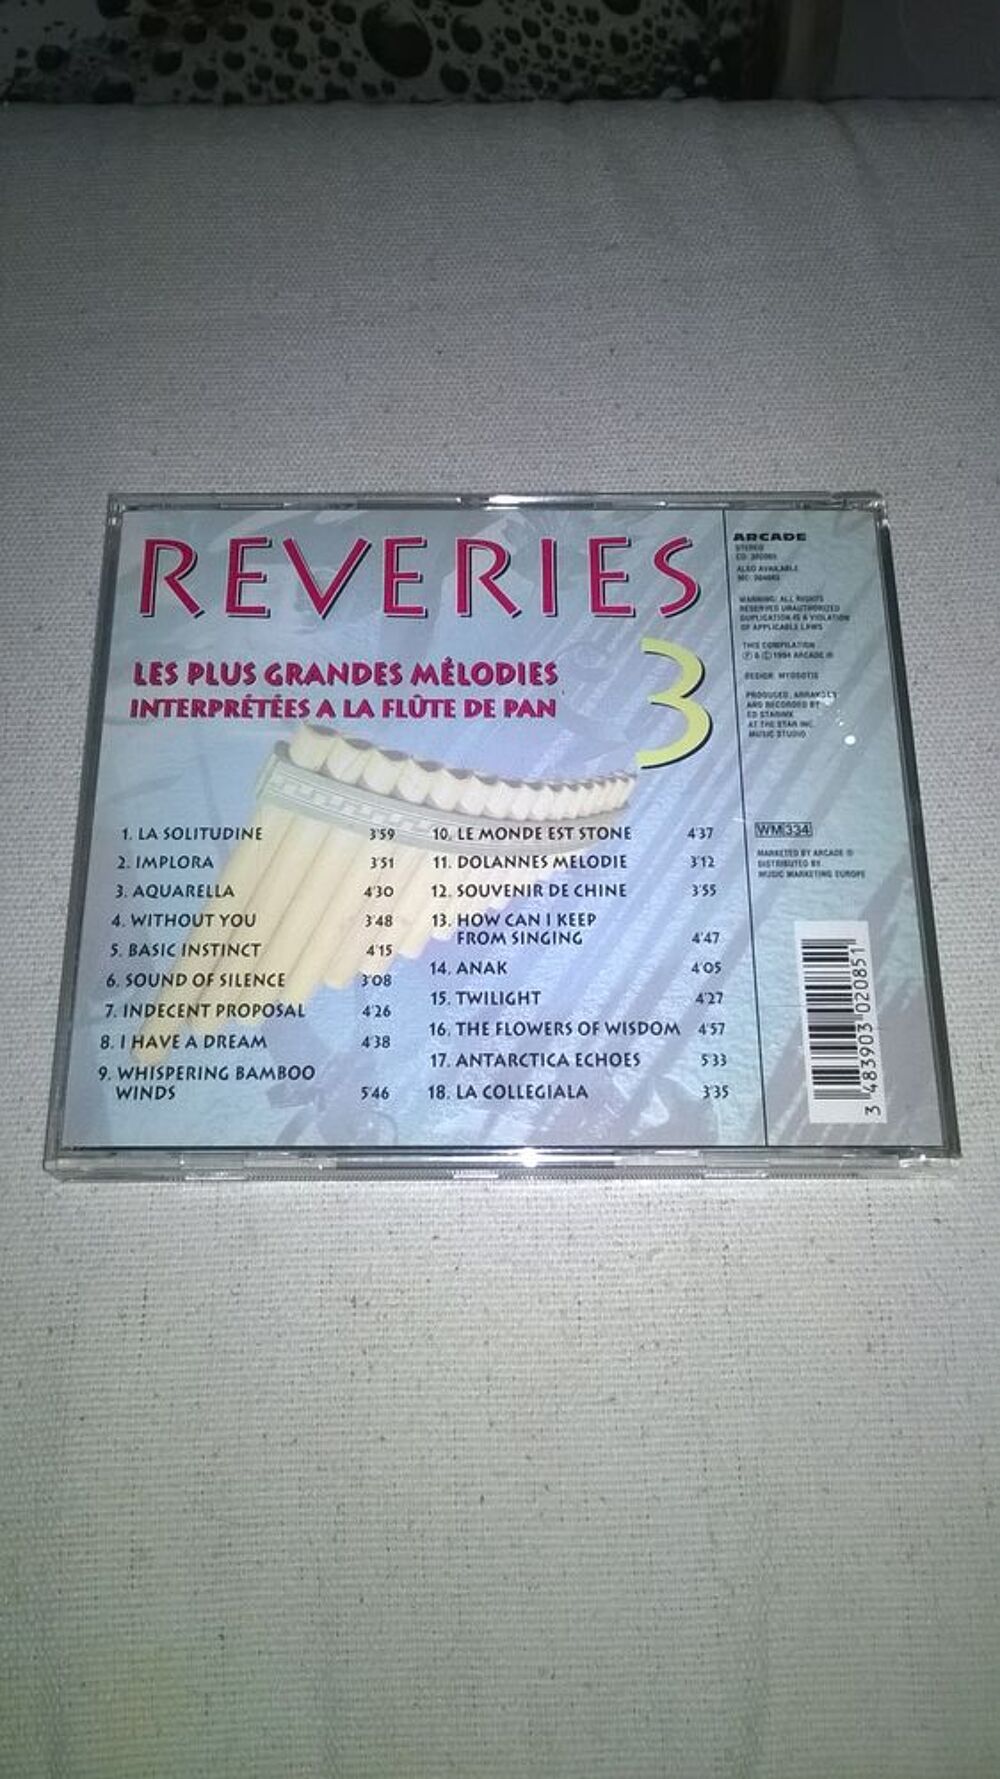 Cd Reveries a la Flute de Pan
1994
Excellent etat
la Soli CD et vinyles